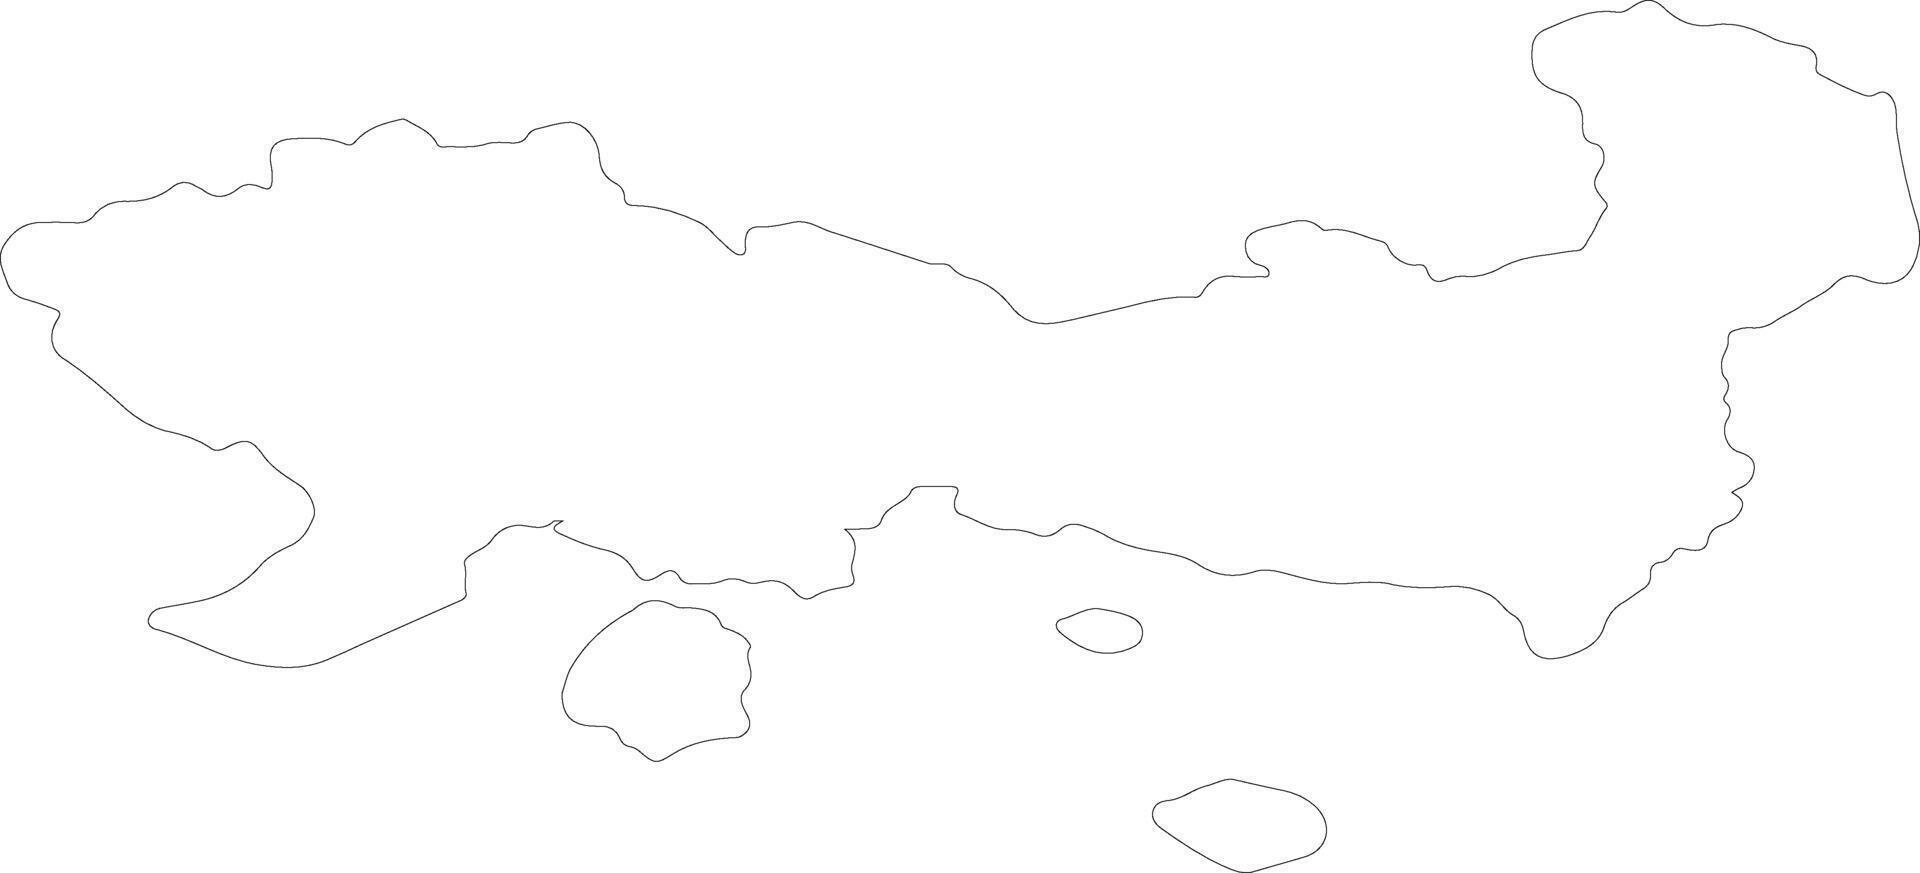 anatoliki makedonia kai traki Grecia contorno mapa vector